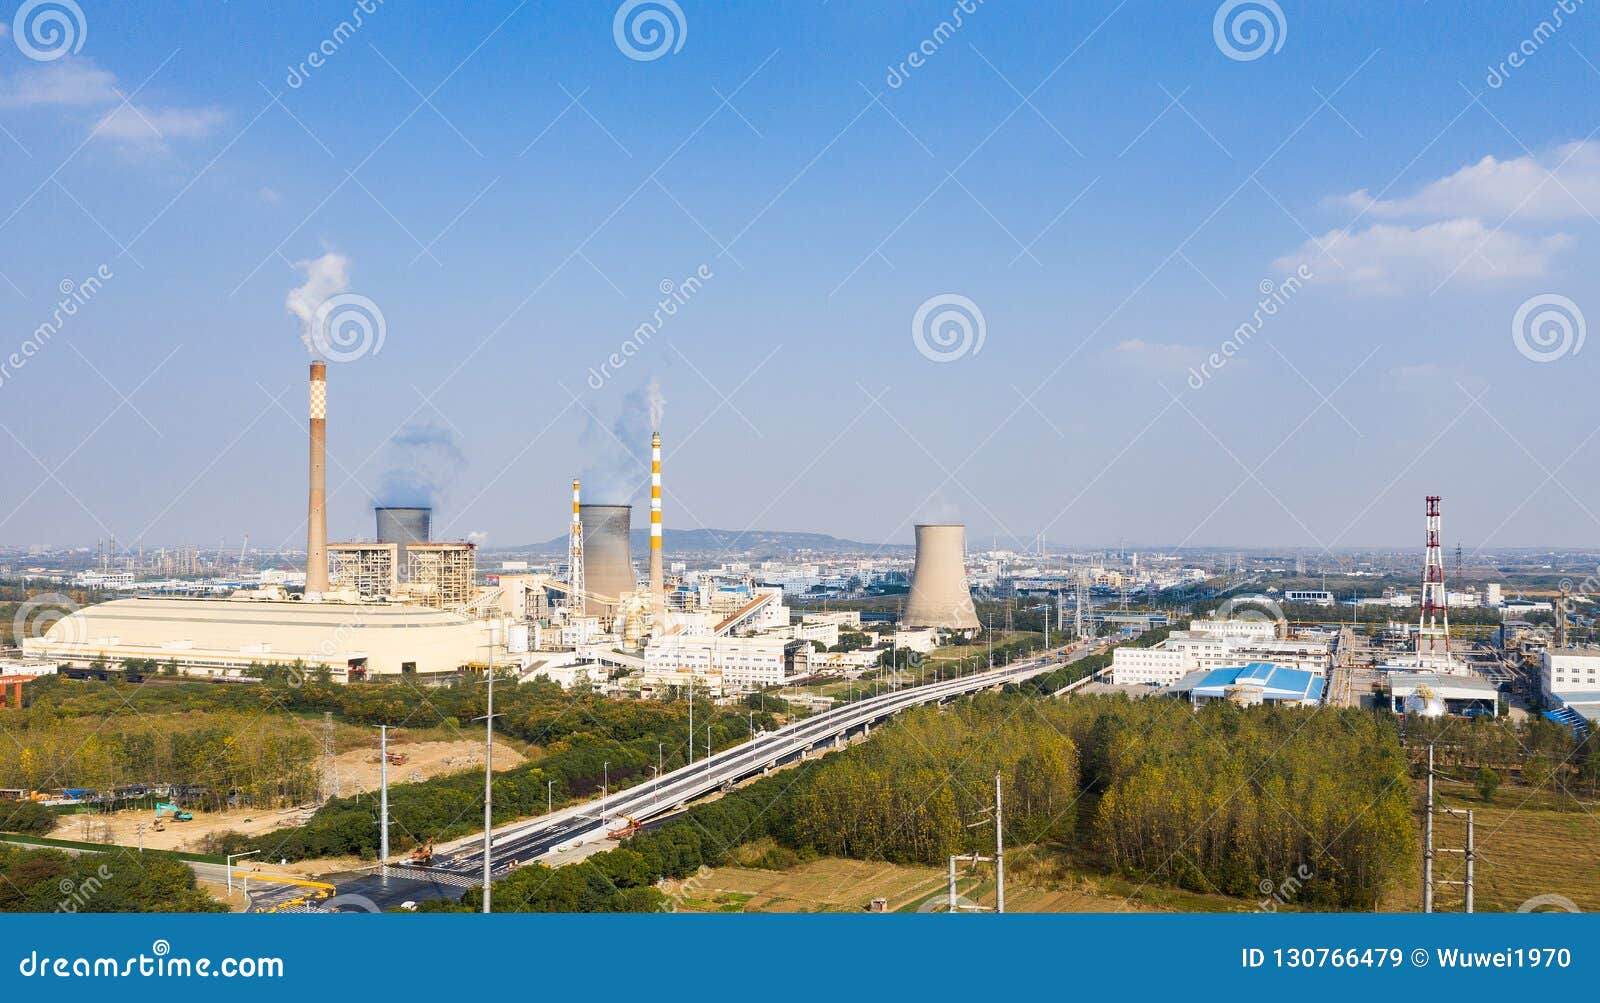 nanjing jiangbei chemical industrial park